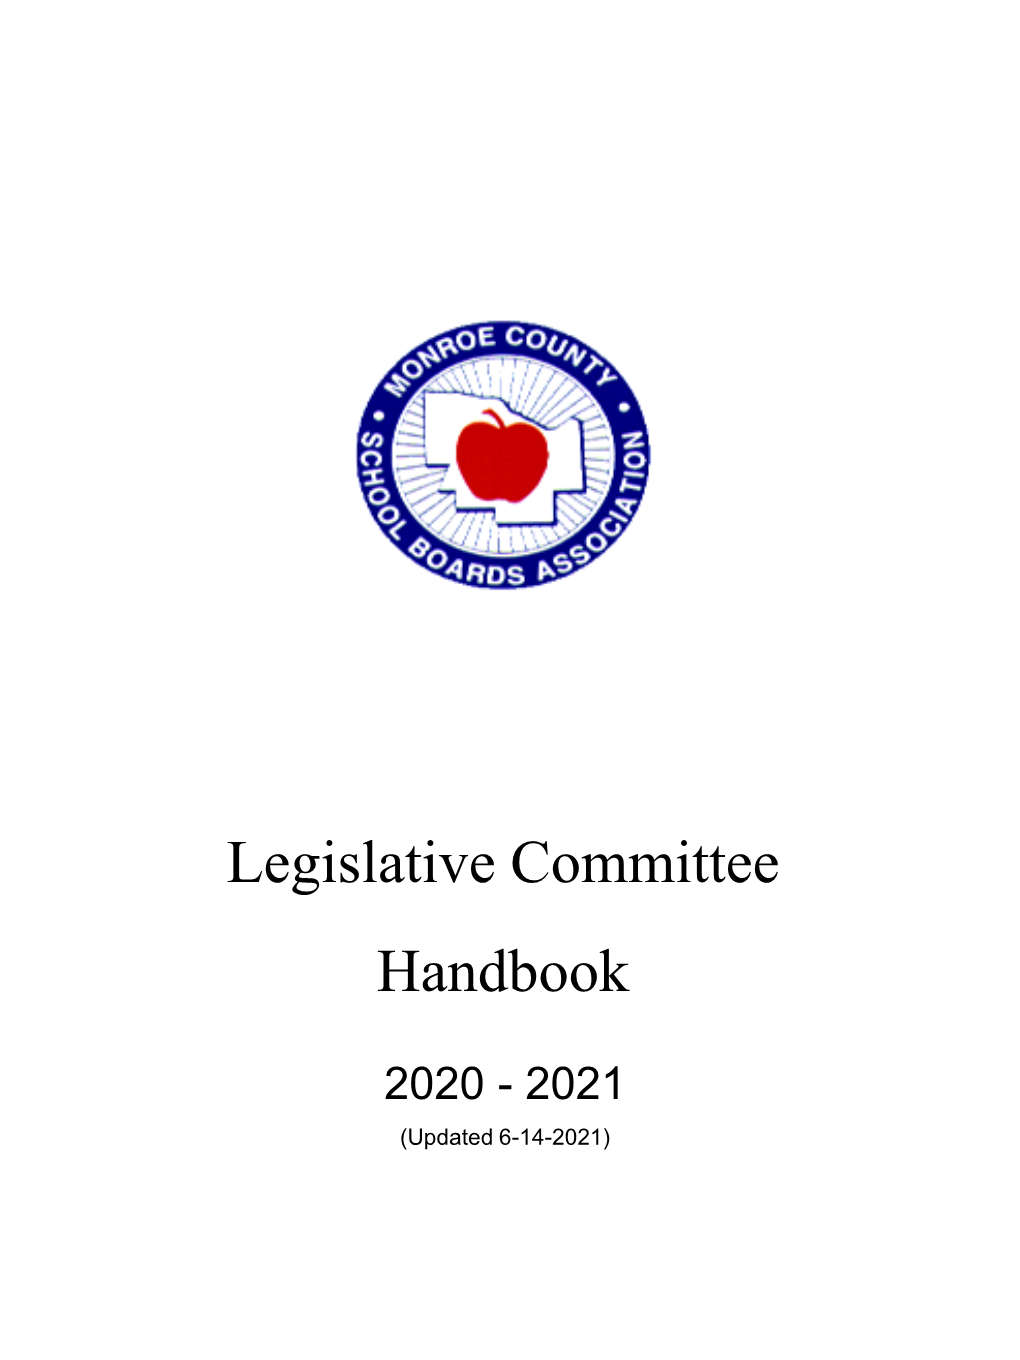 2021-2022 Legislative Handbook